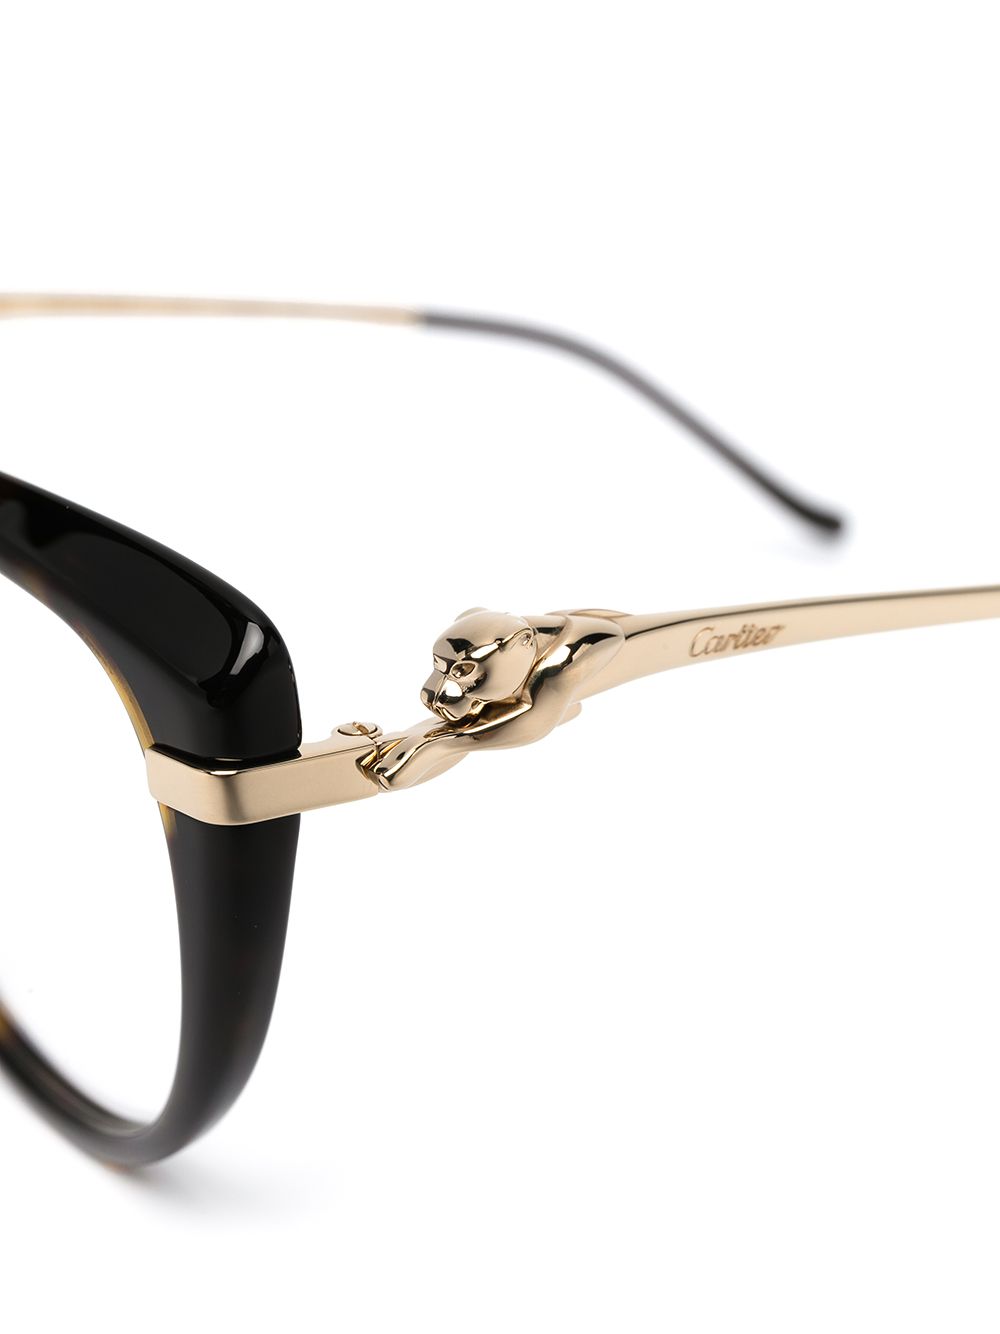 фото Cartier eyewear очки panthère в оправе 'кошачий глаз'